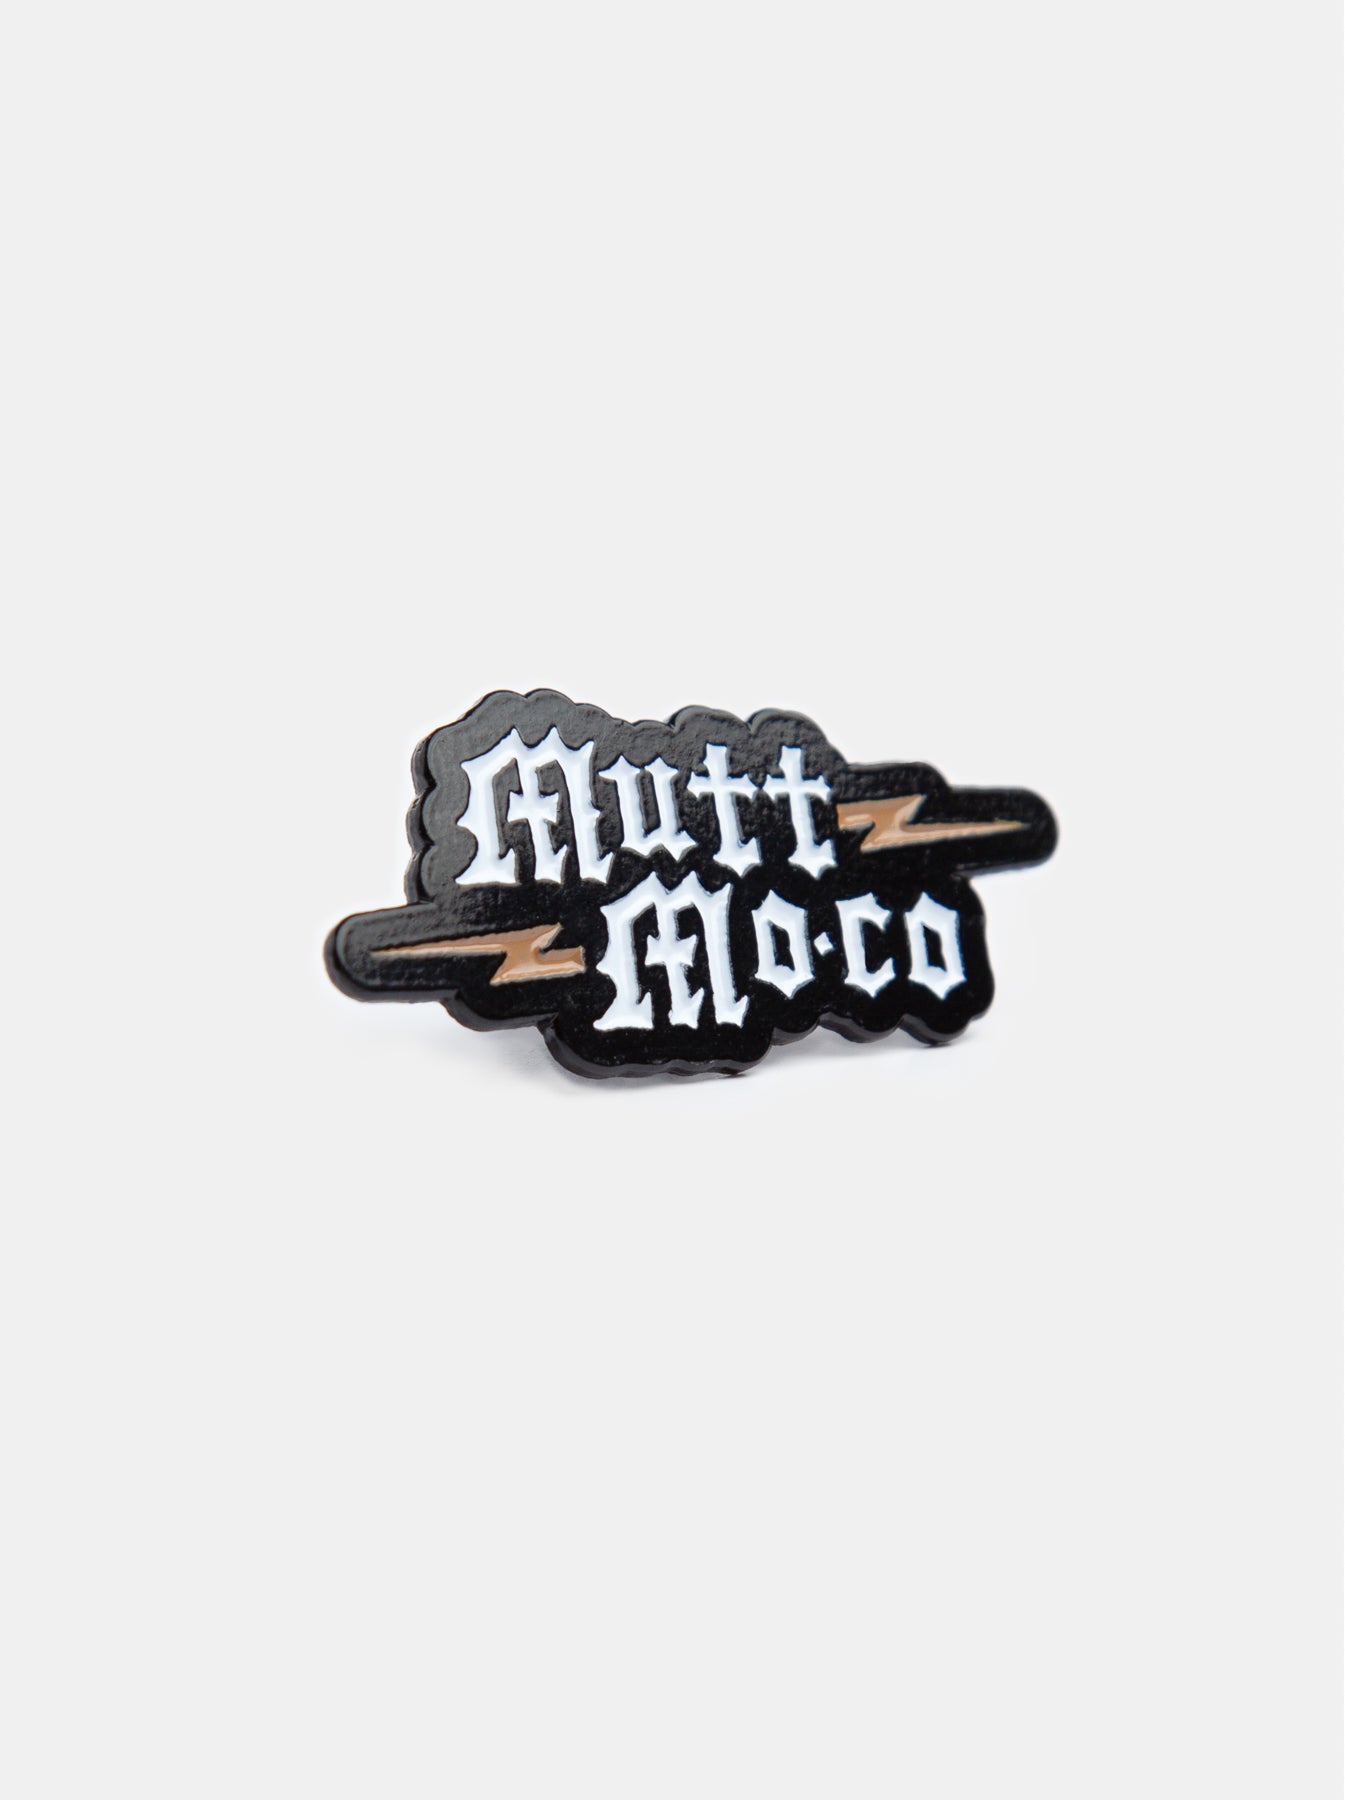 Mutt Mo.Co Enamel Pin Badge